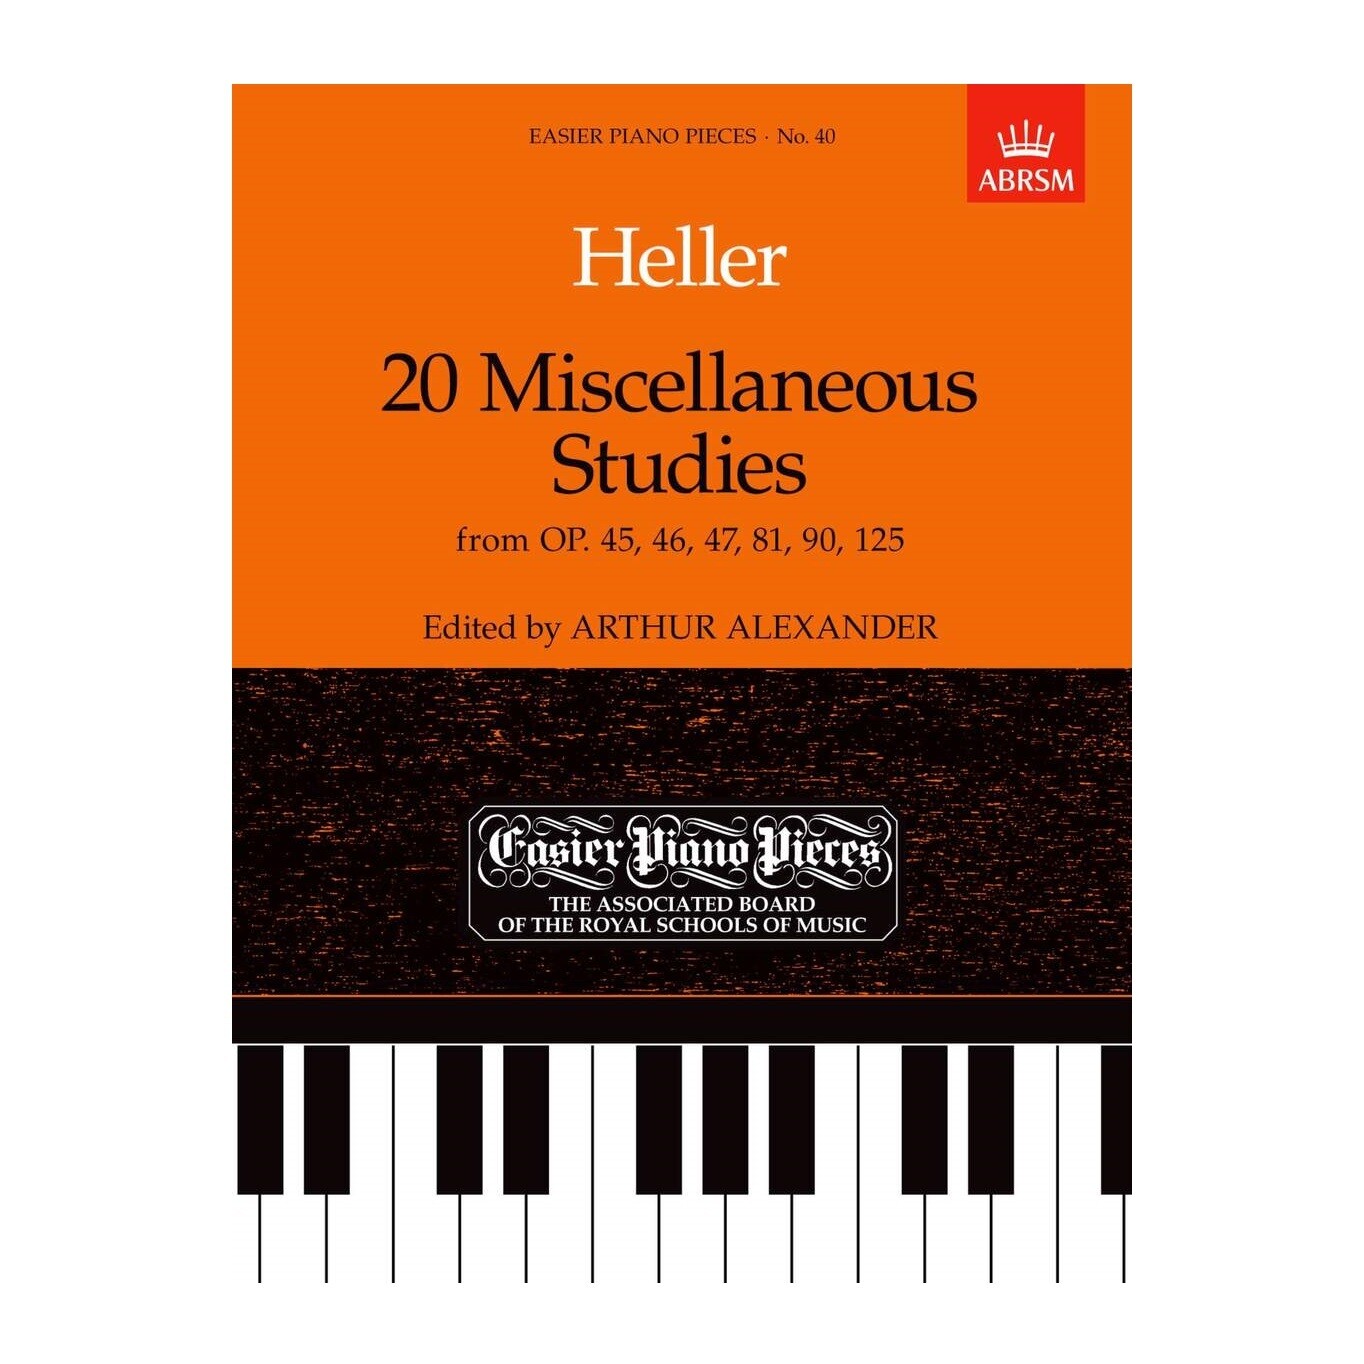 Heller - 20 Miscellaneous Studies from Op.45,46,47,81,90,125.